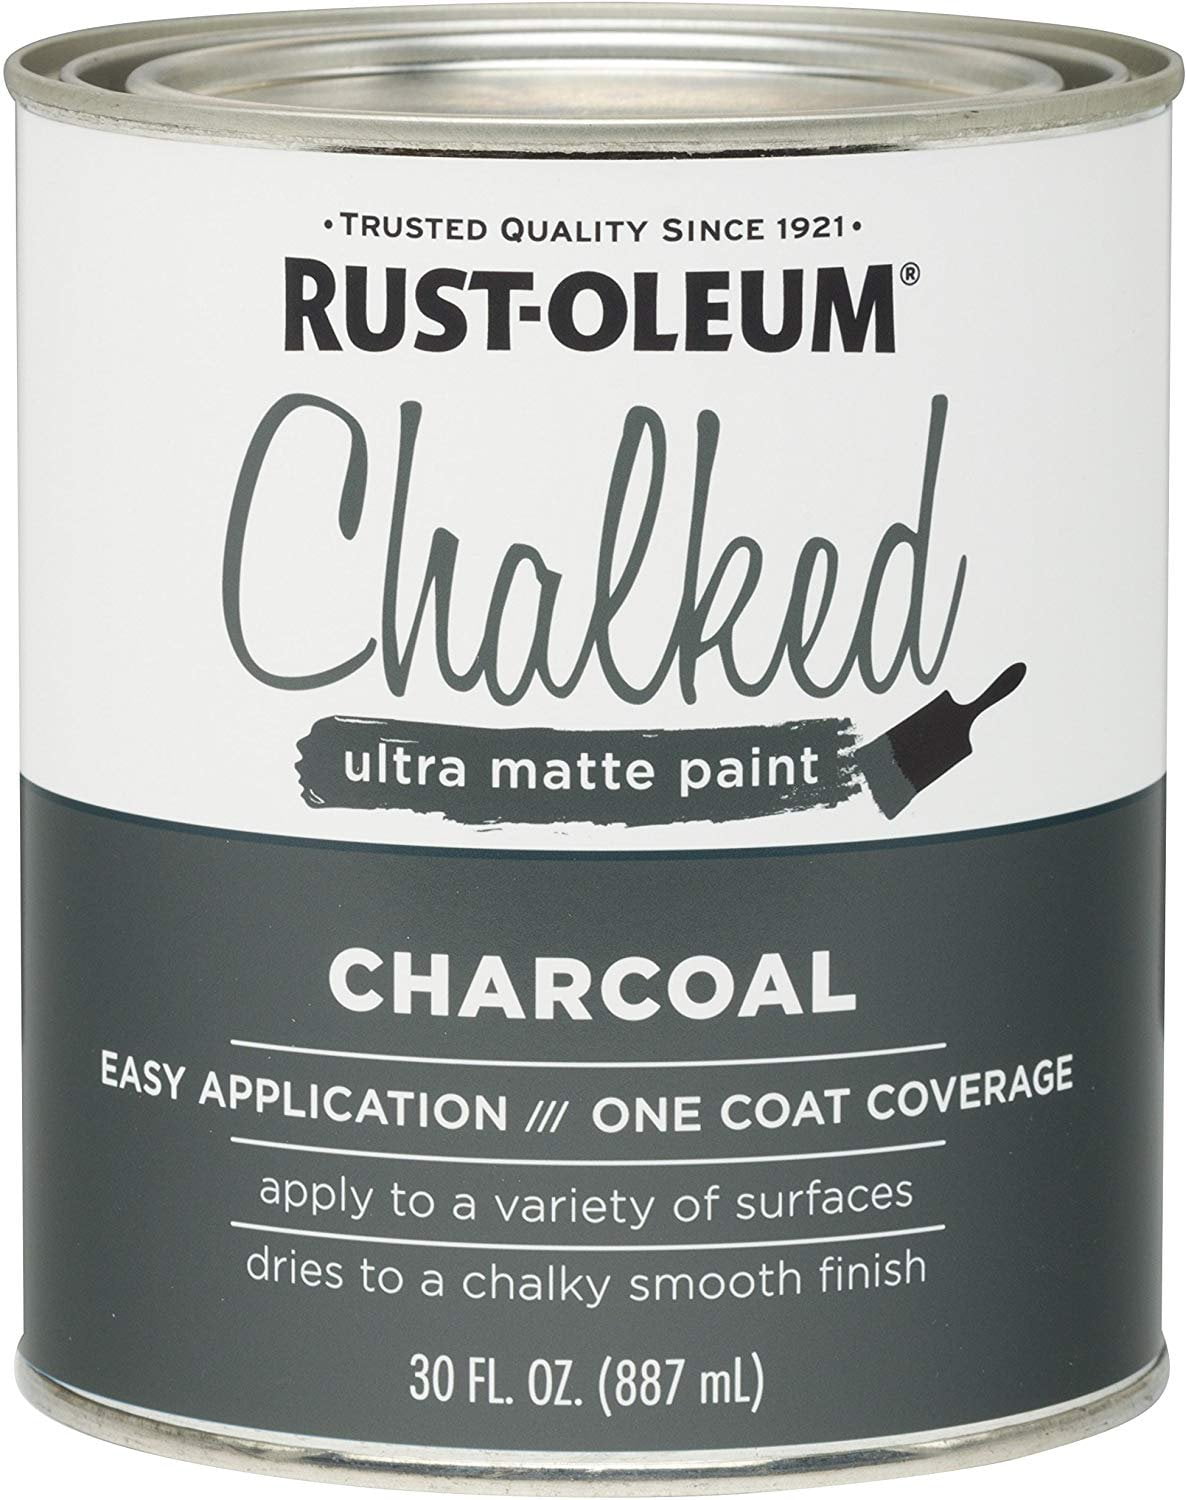 Rust-Oleum 285144 Ultra Matte Interior Chalked Paint 30 oz, Charcoal